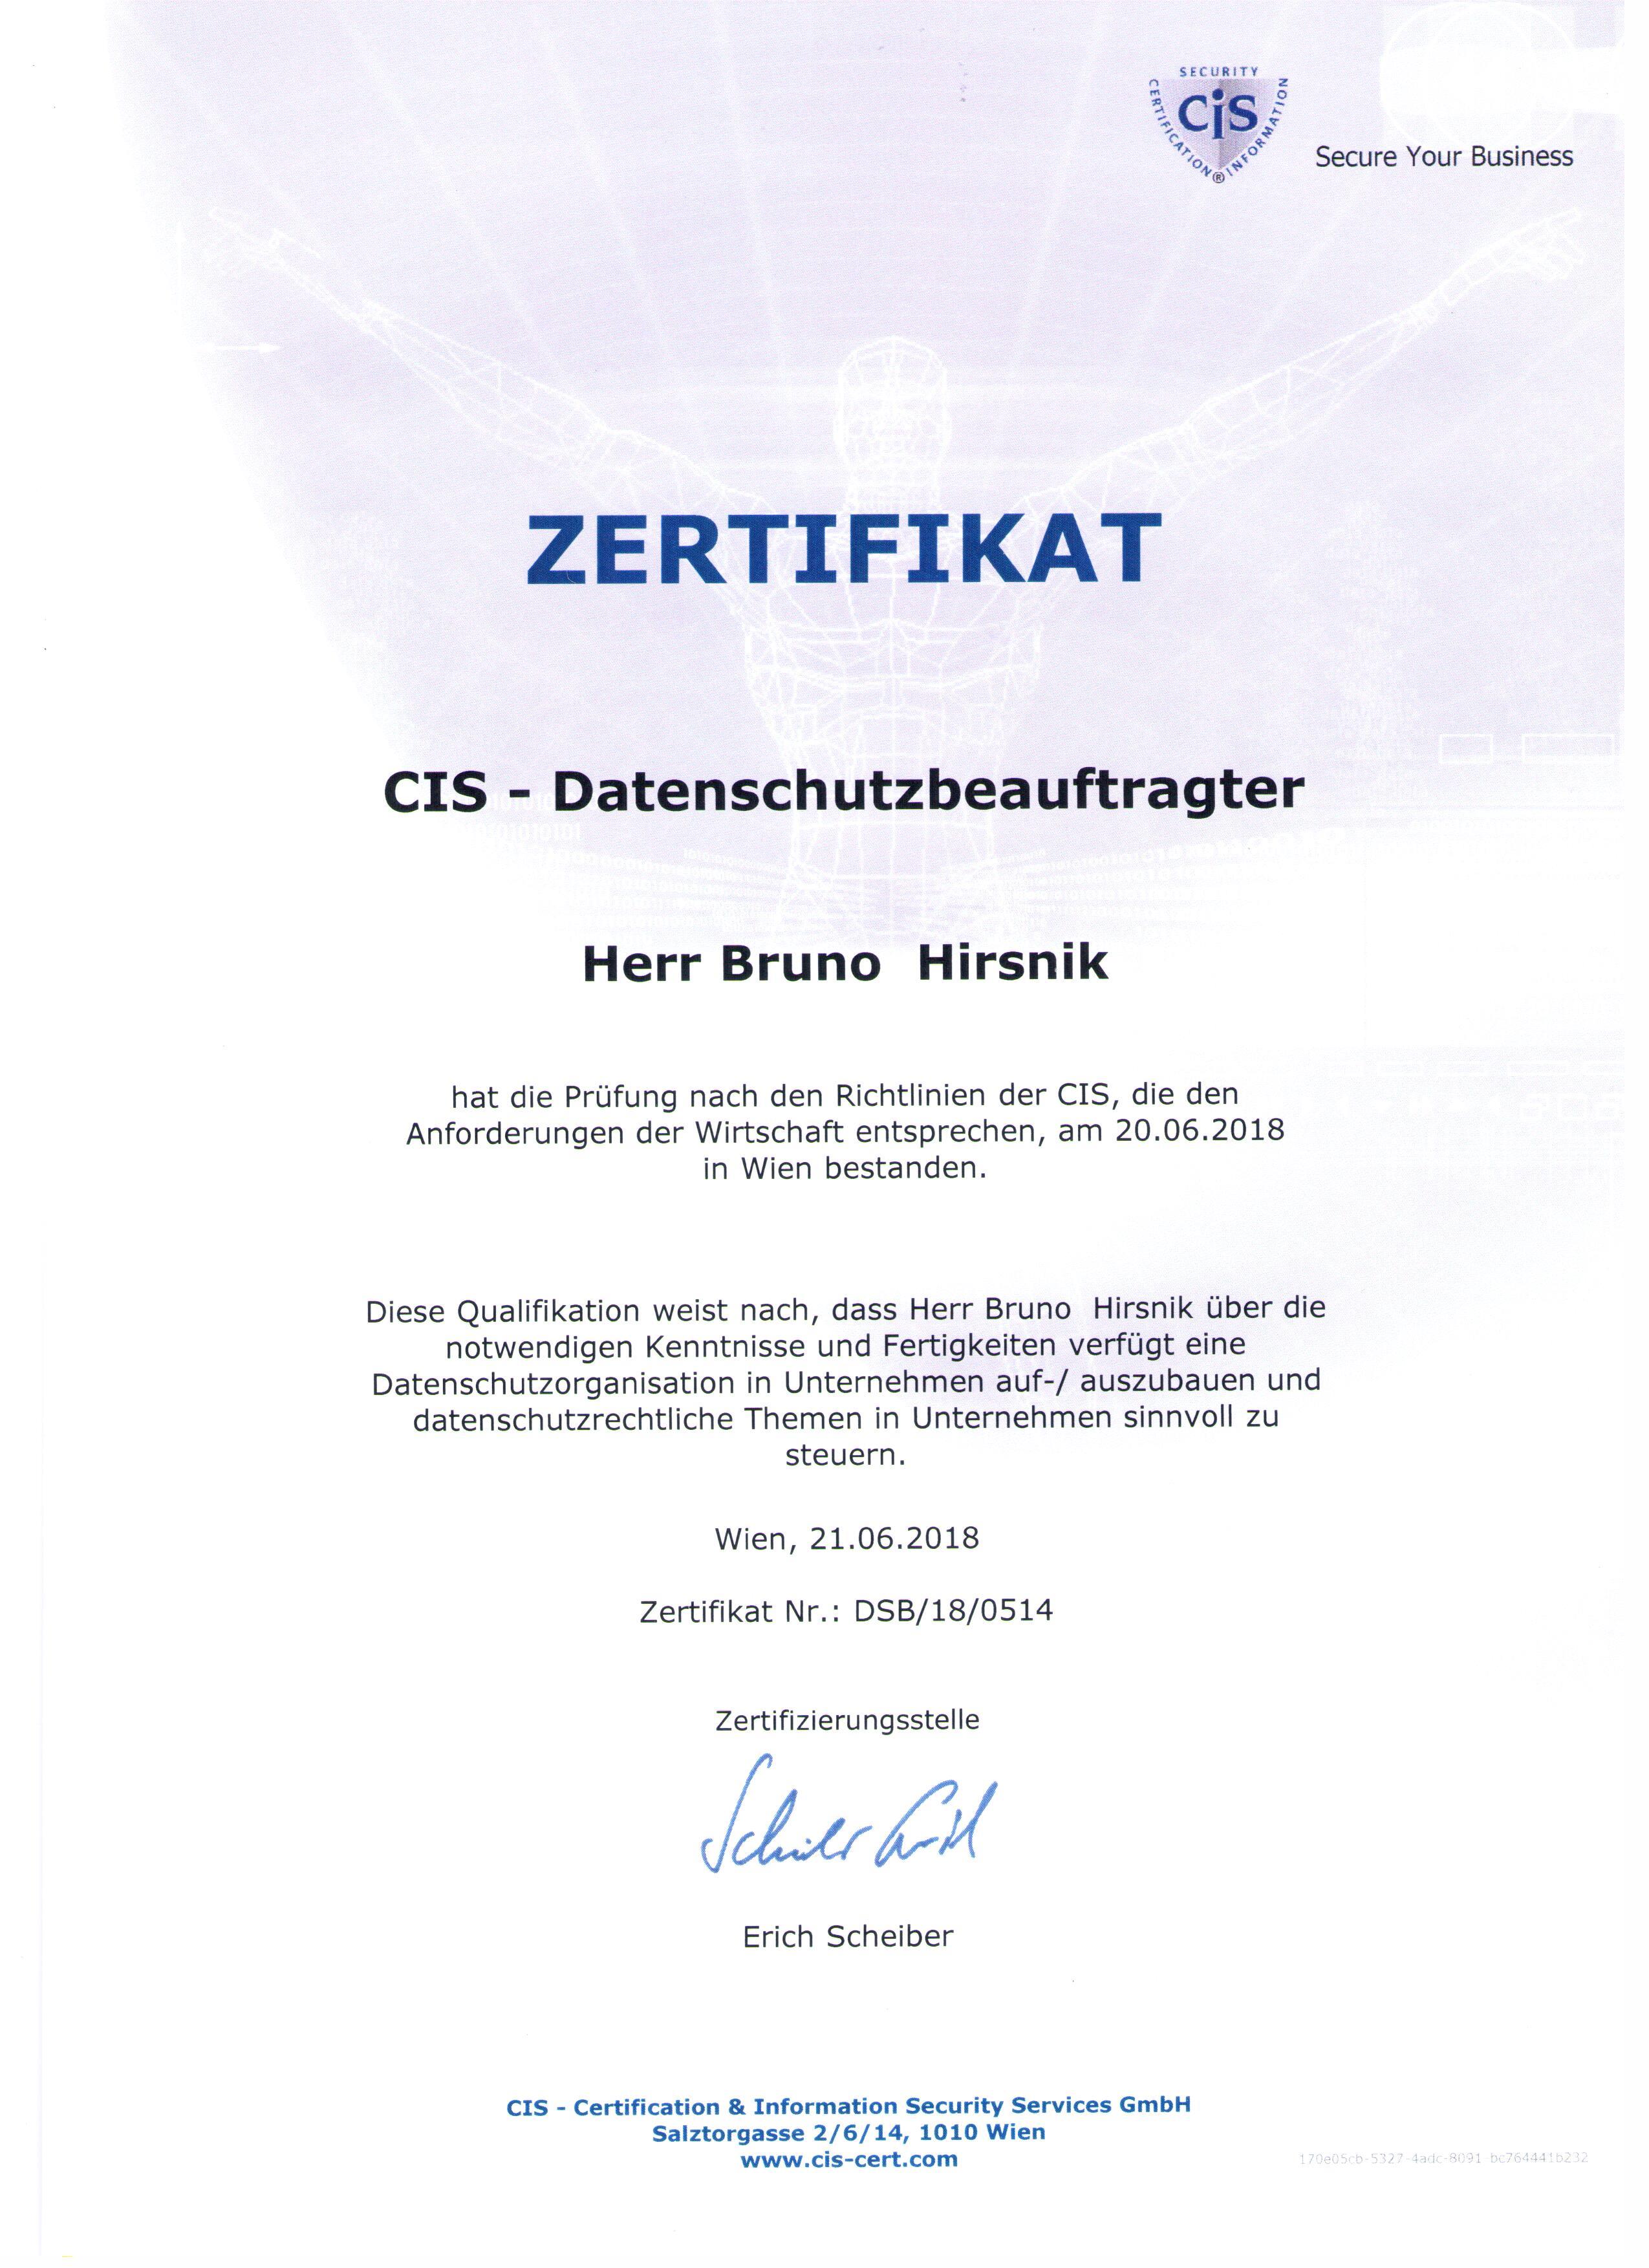 CIS Zertifikat